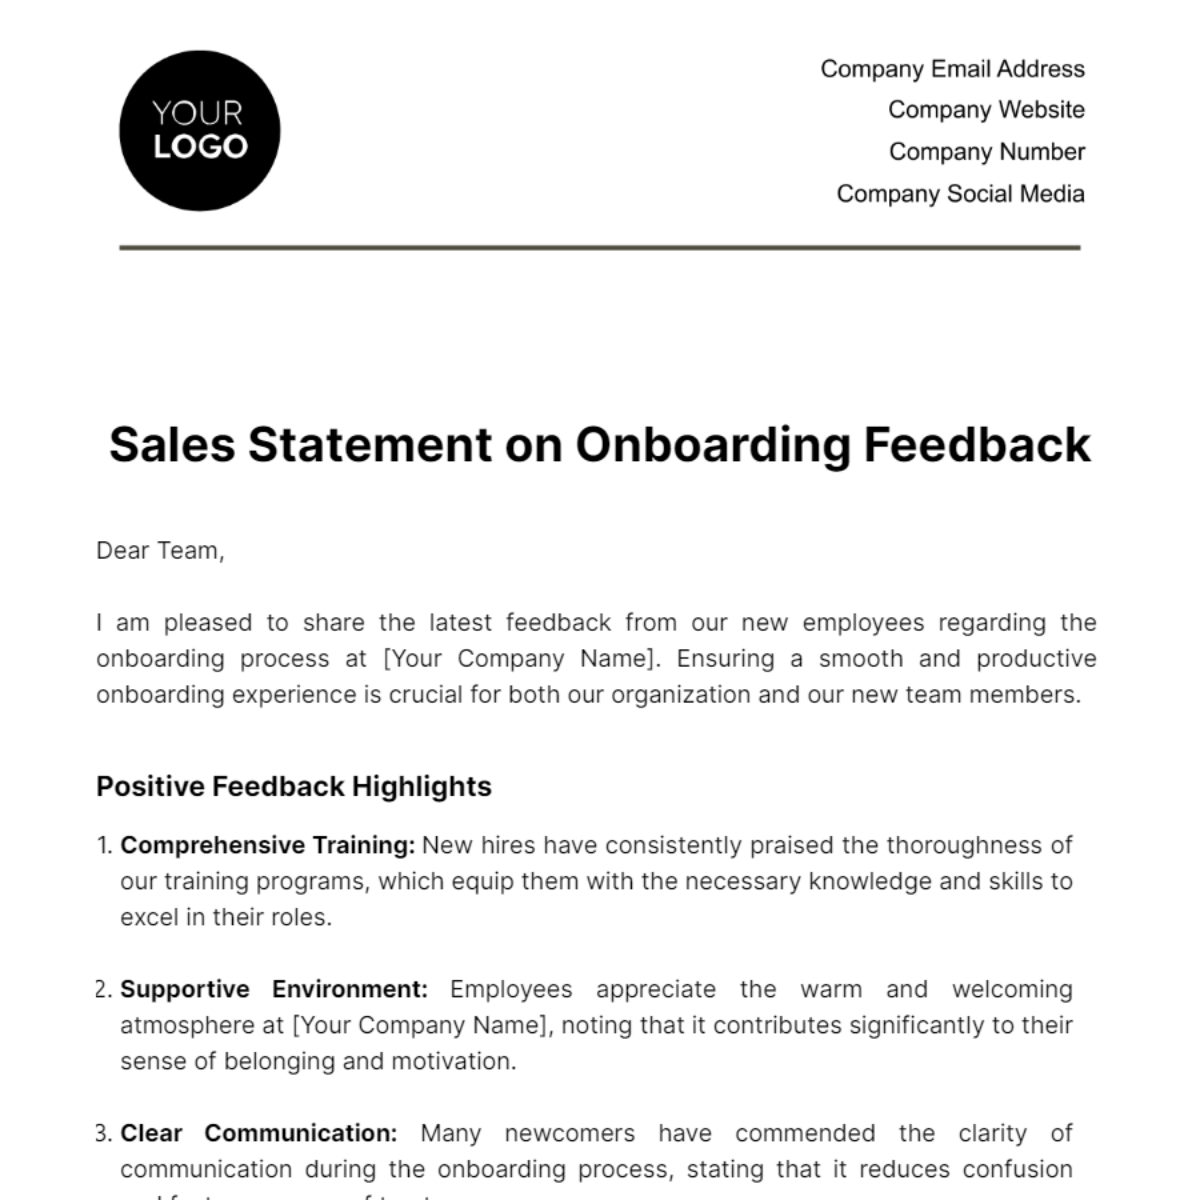 Sales Statement on Onboarding Feedback Template